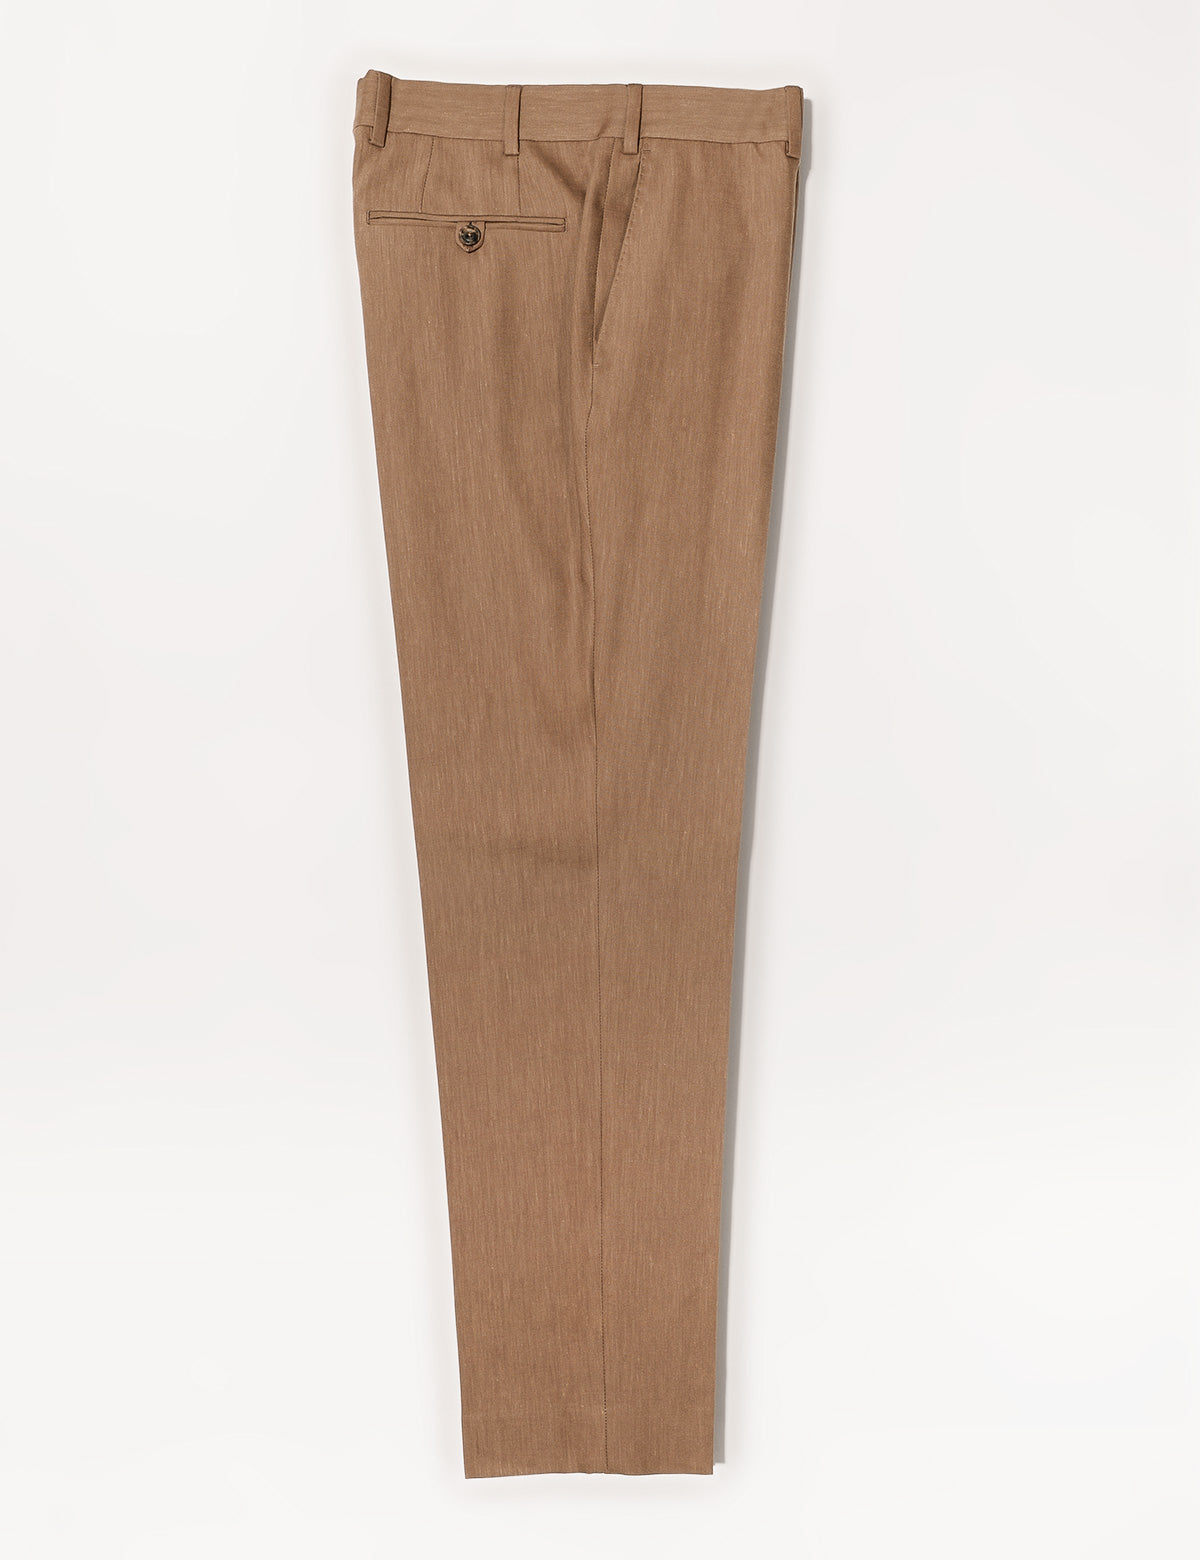 Brooklyn Tailors BKT50 Tailored Trousers in Wool Linen - Sahara full length flat shot